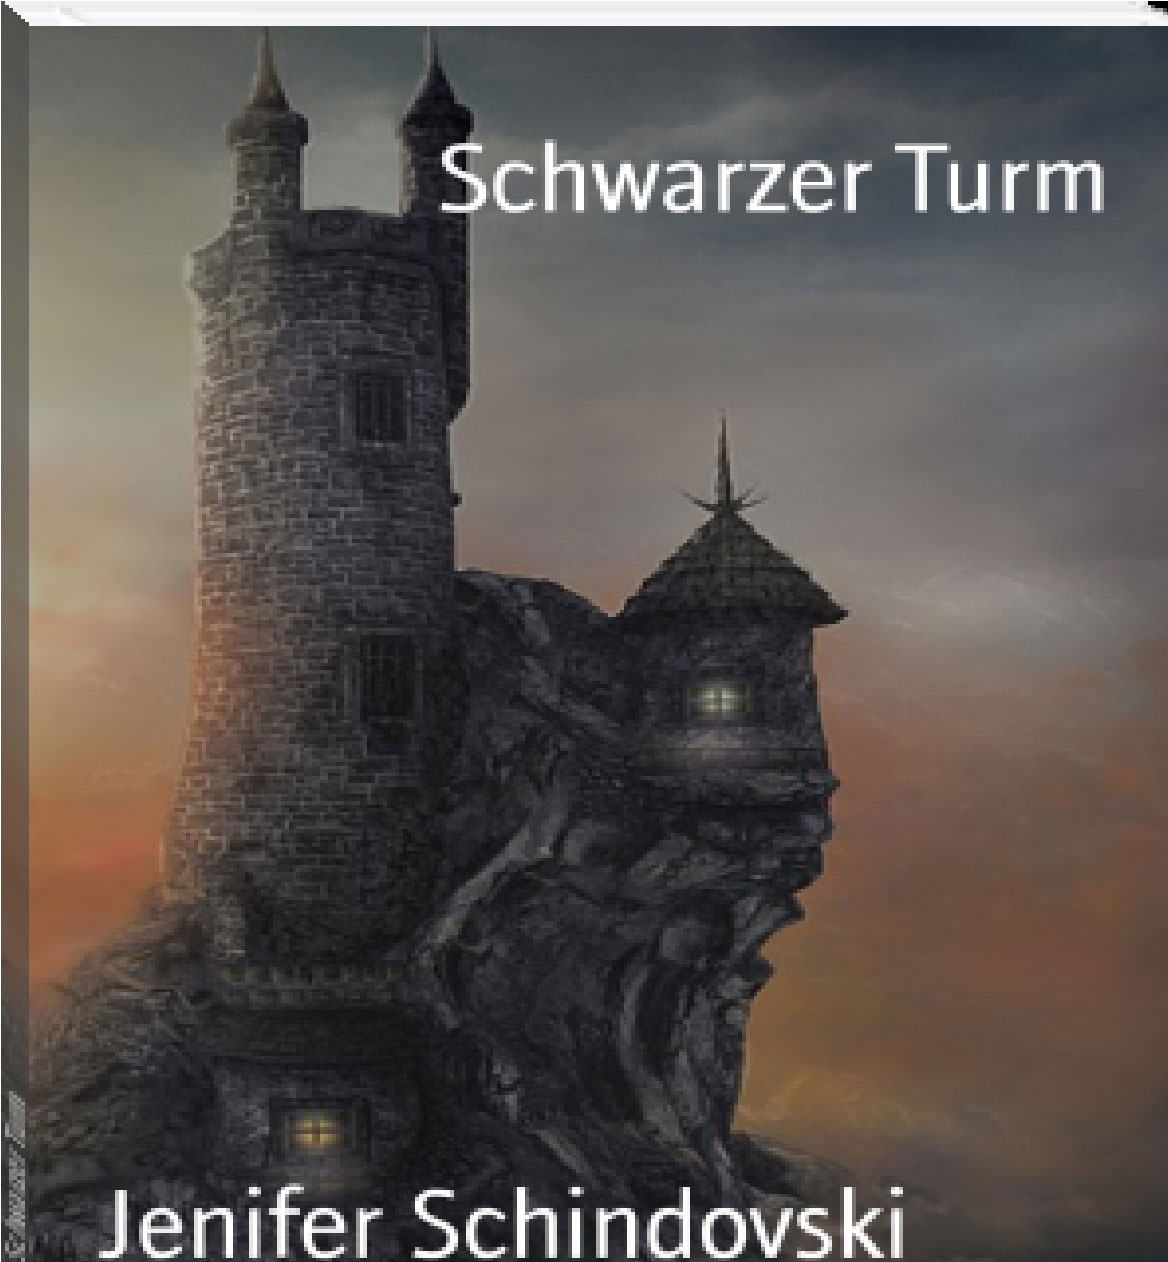 Schwarzer Turm rendition image